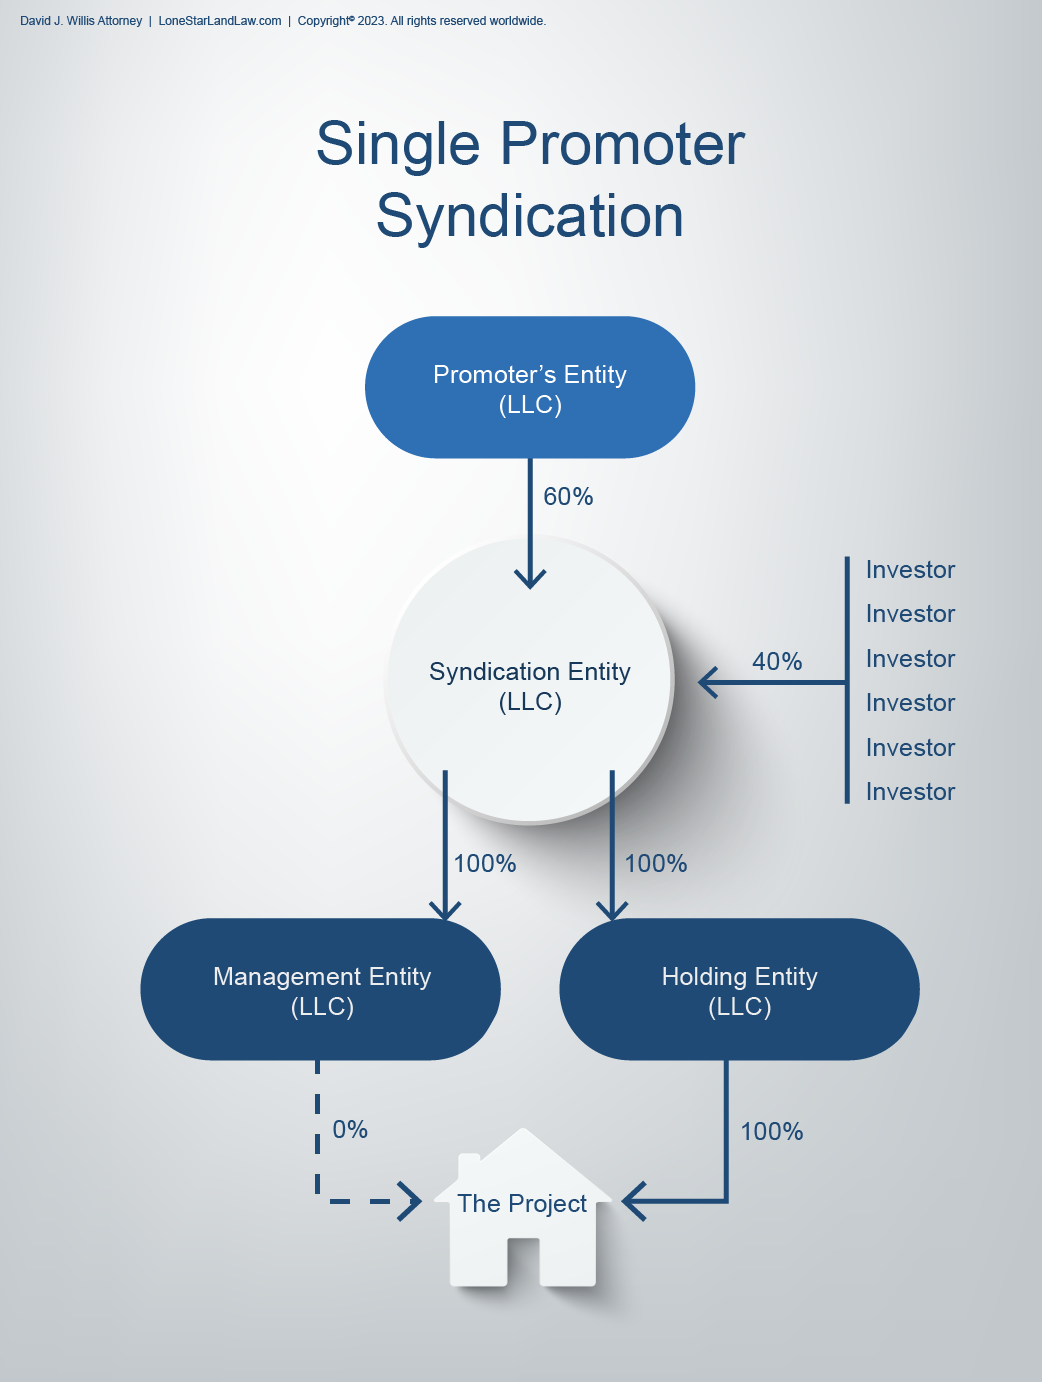 Single Promoter Syndication - Asset Protection